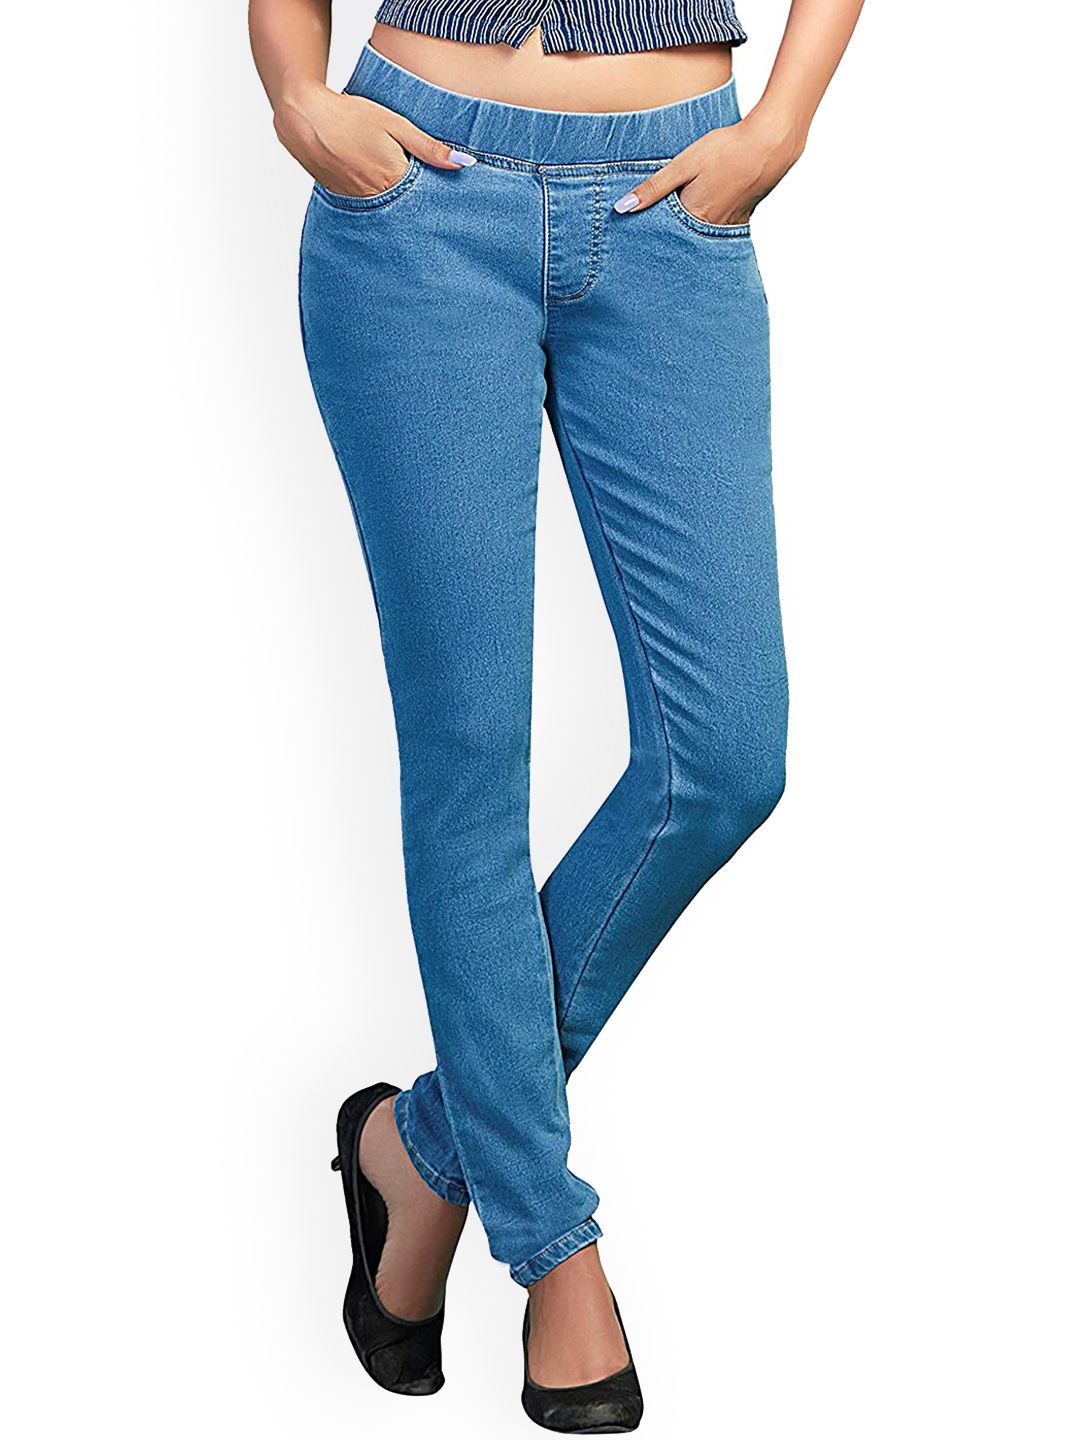 Buy Blue Jeans & Jeggings for Women by ADBUCKS Online